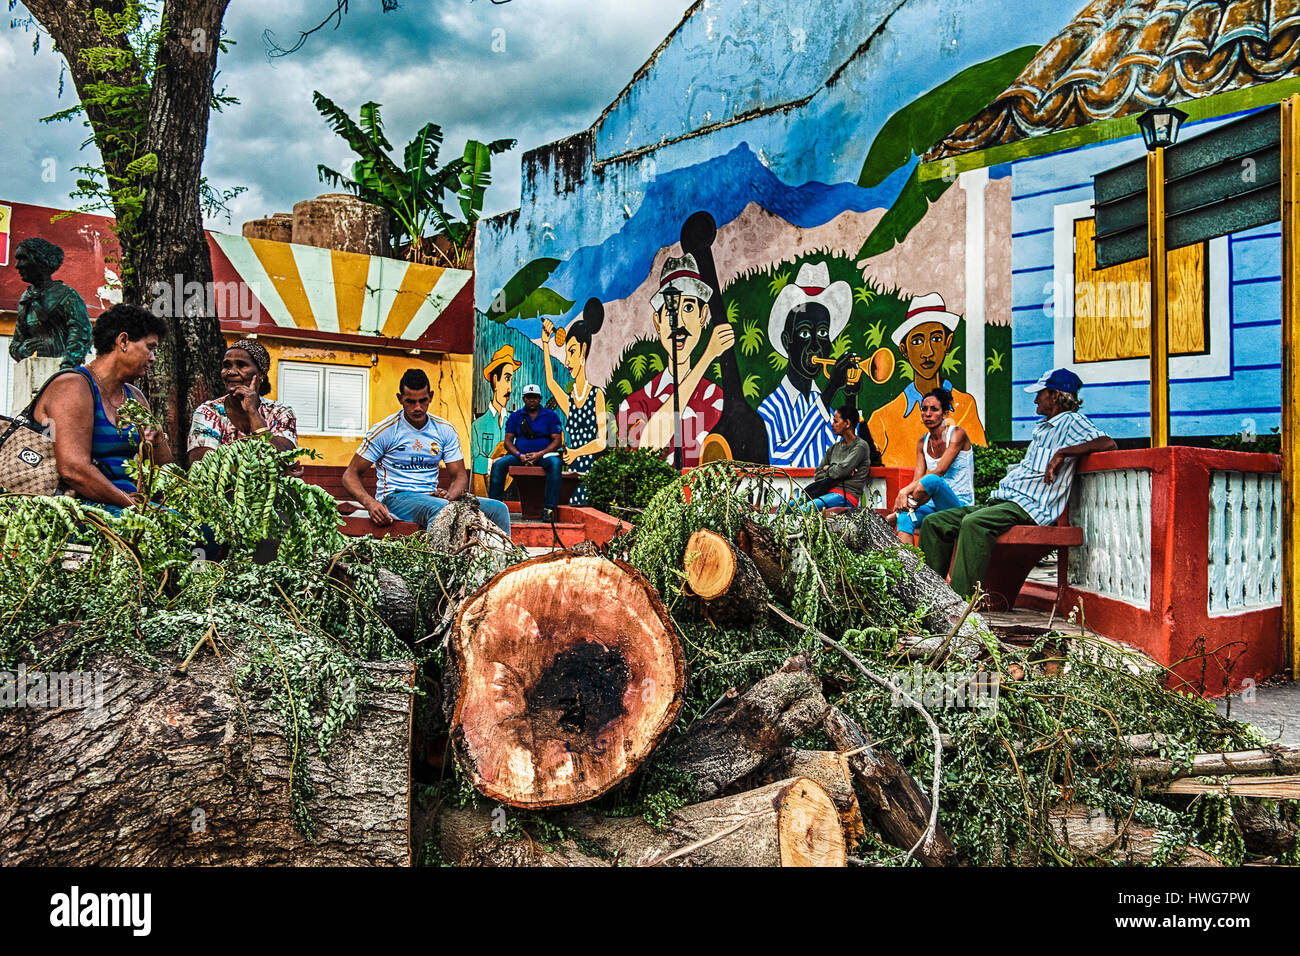 Les troncs d'arbres tombés dans un carré de Baracoa, Cuba, après le passage de l'ouragan Matthew Banque D'Images